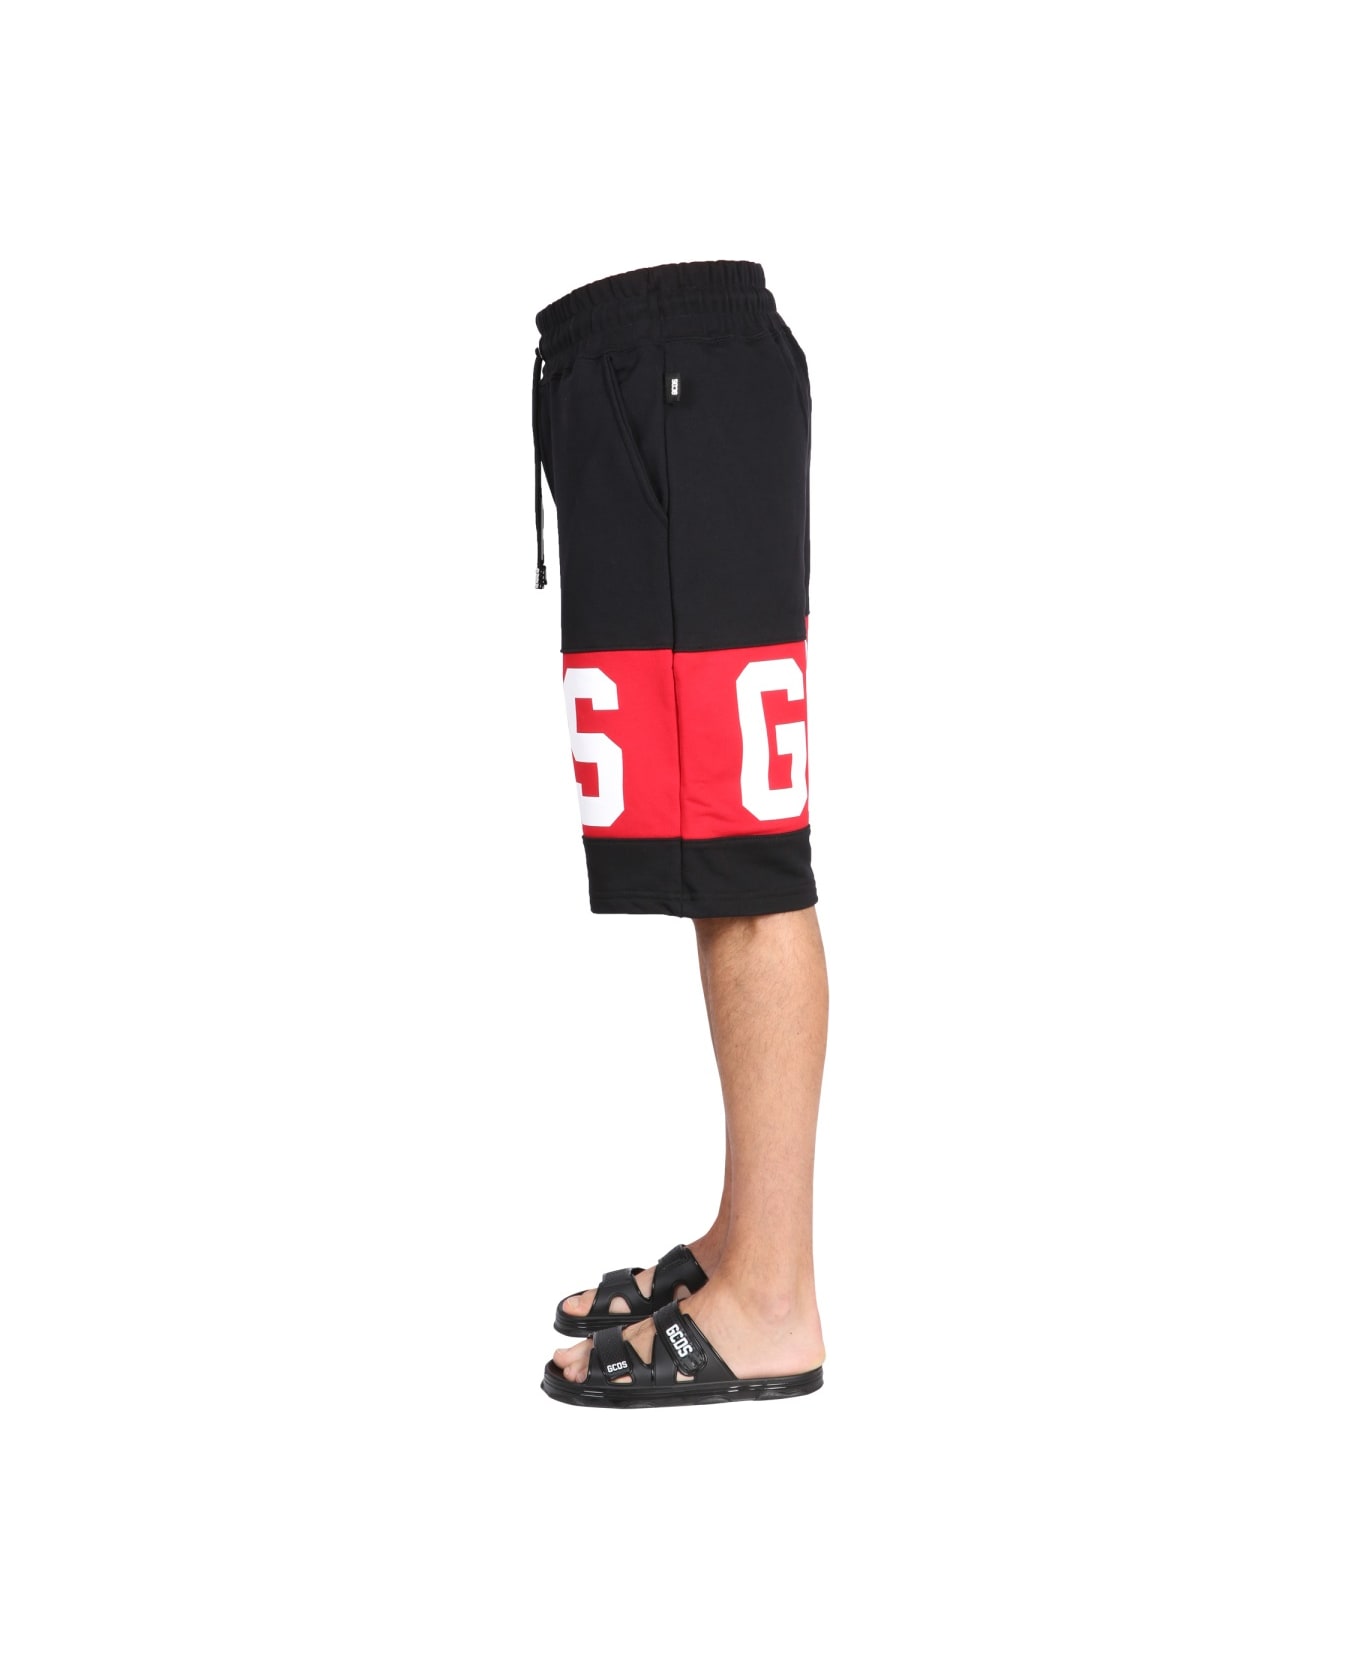 GCDS Bermuda Shorts With Logo Band - BLACK